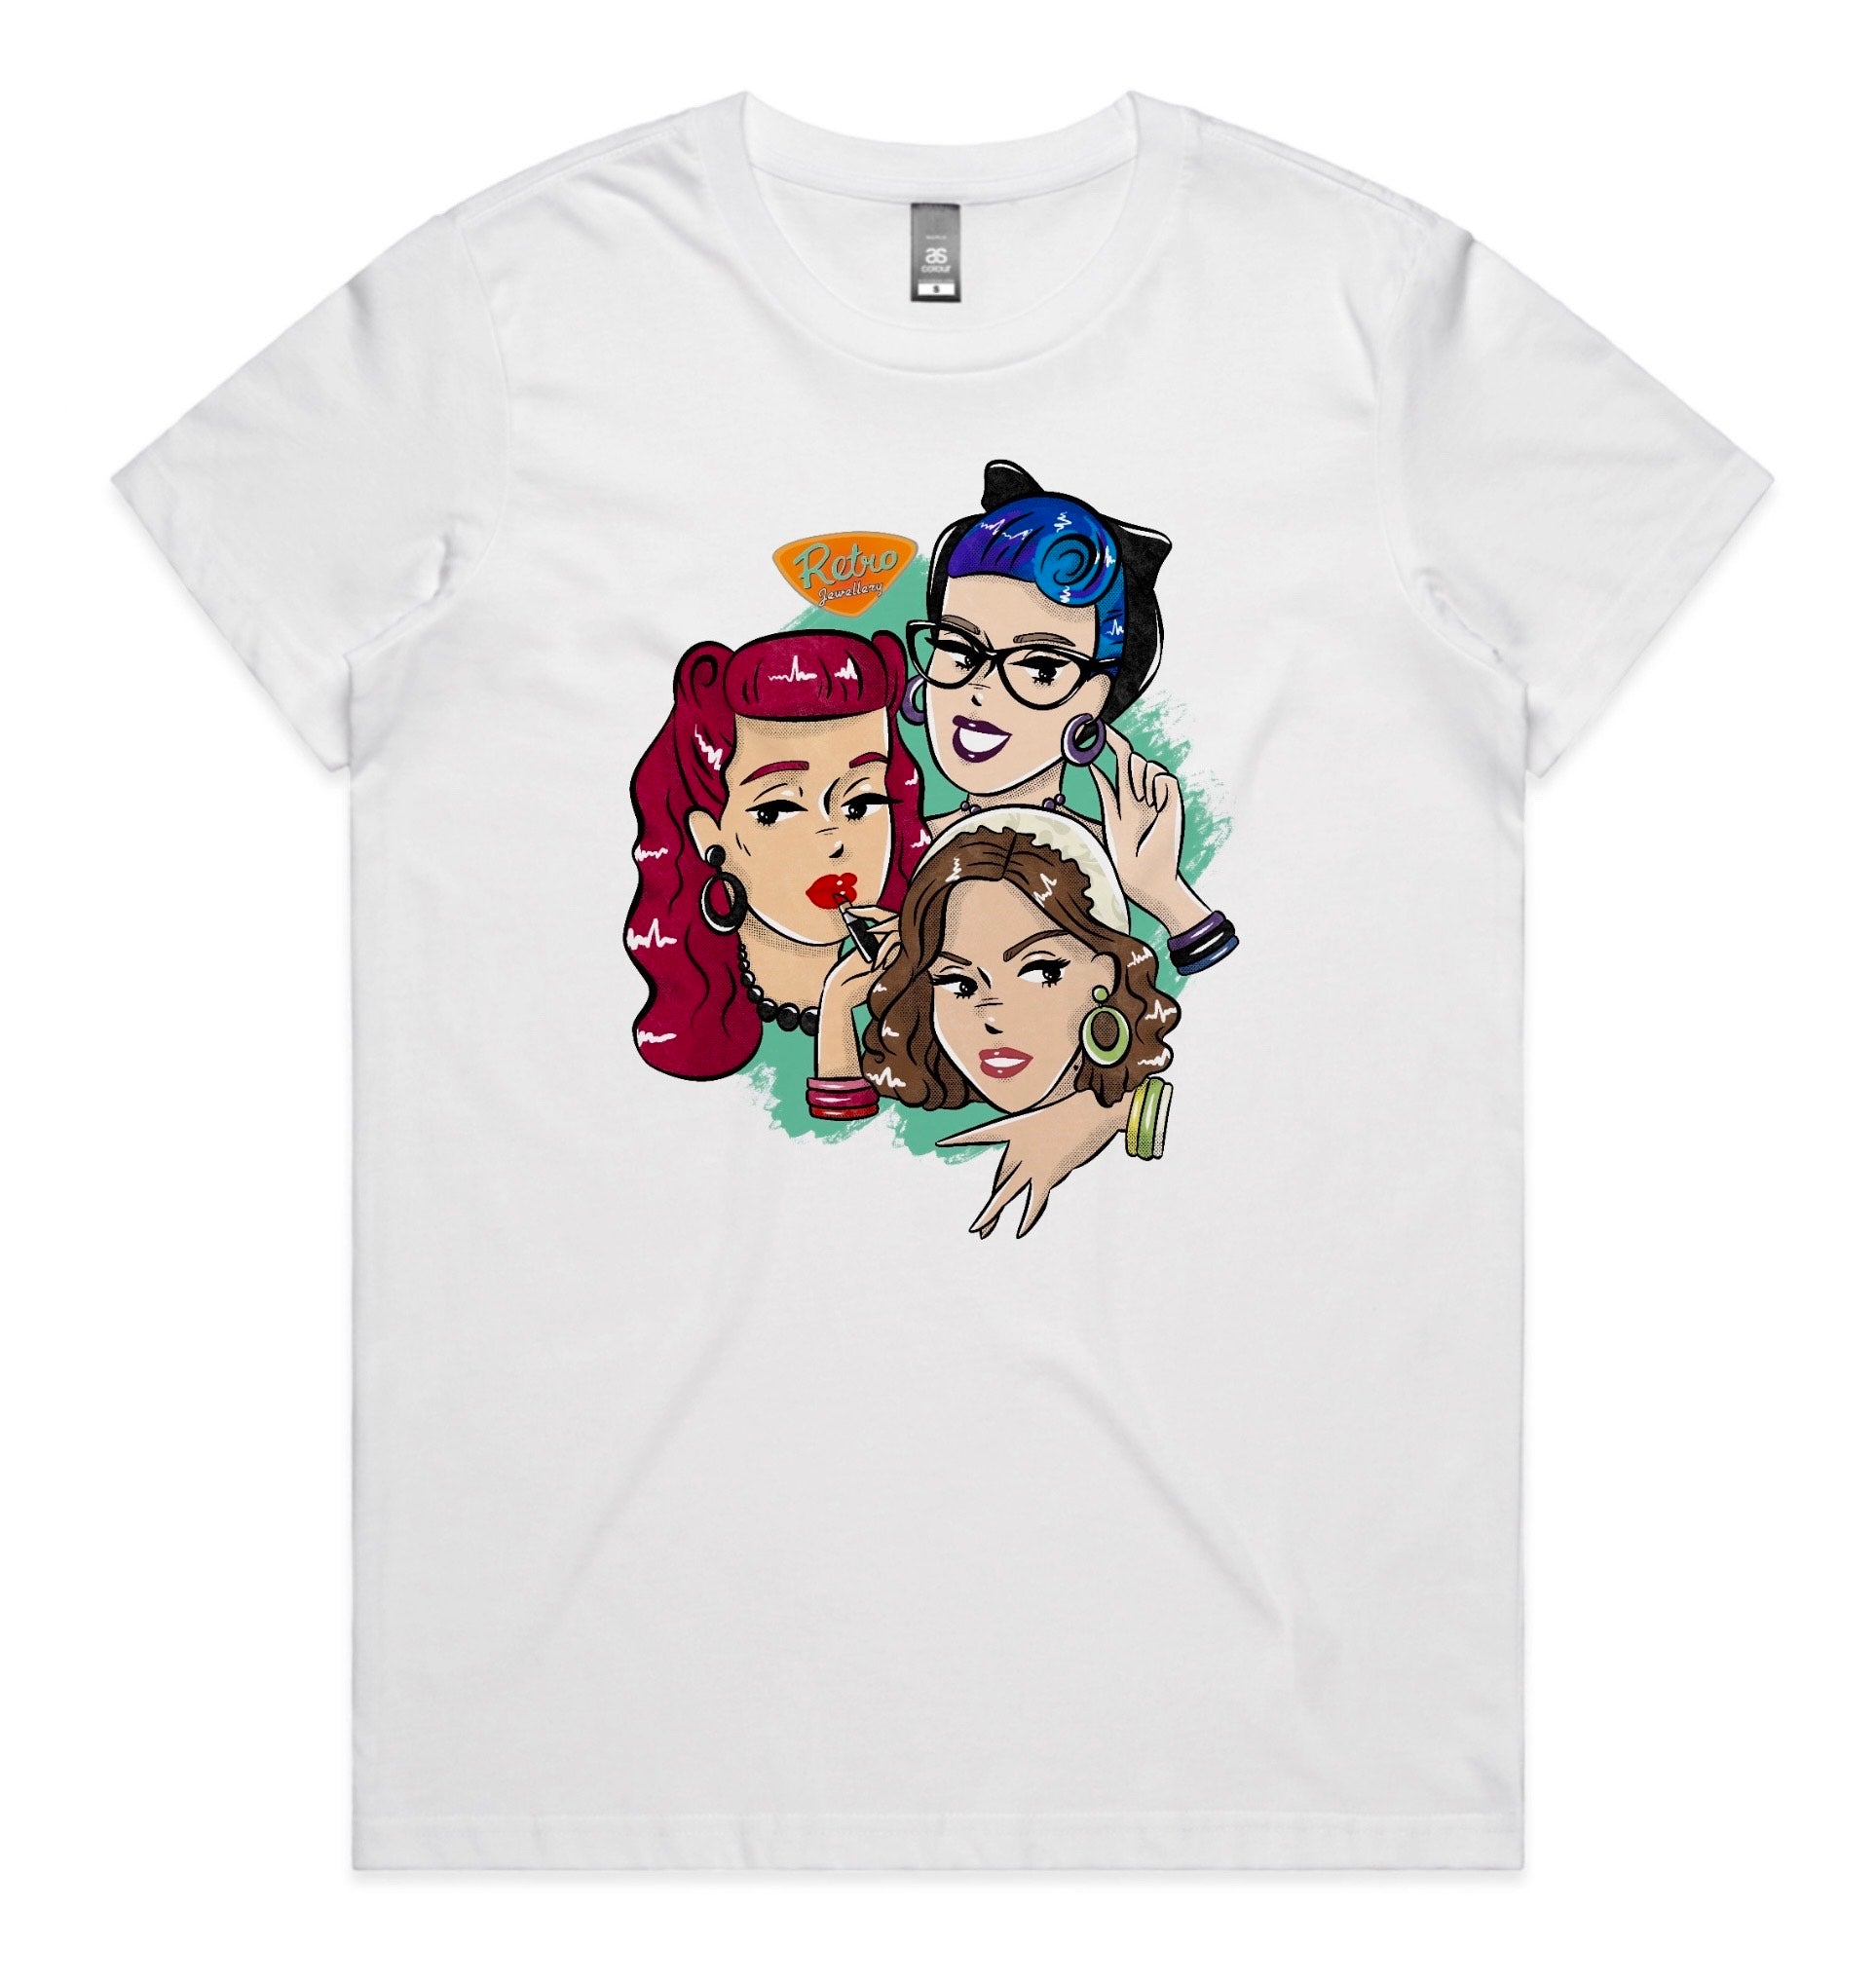 Retro Jewellery  X Jayde Lemonade Collab Womens T-shirt